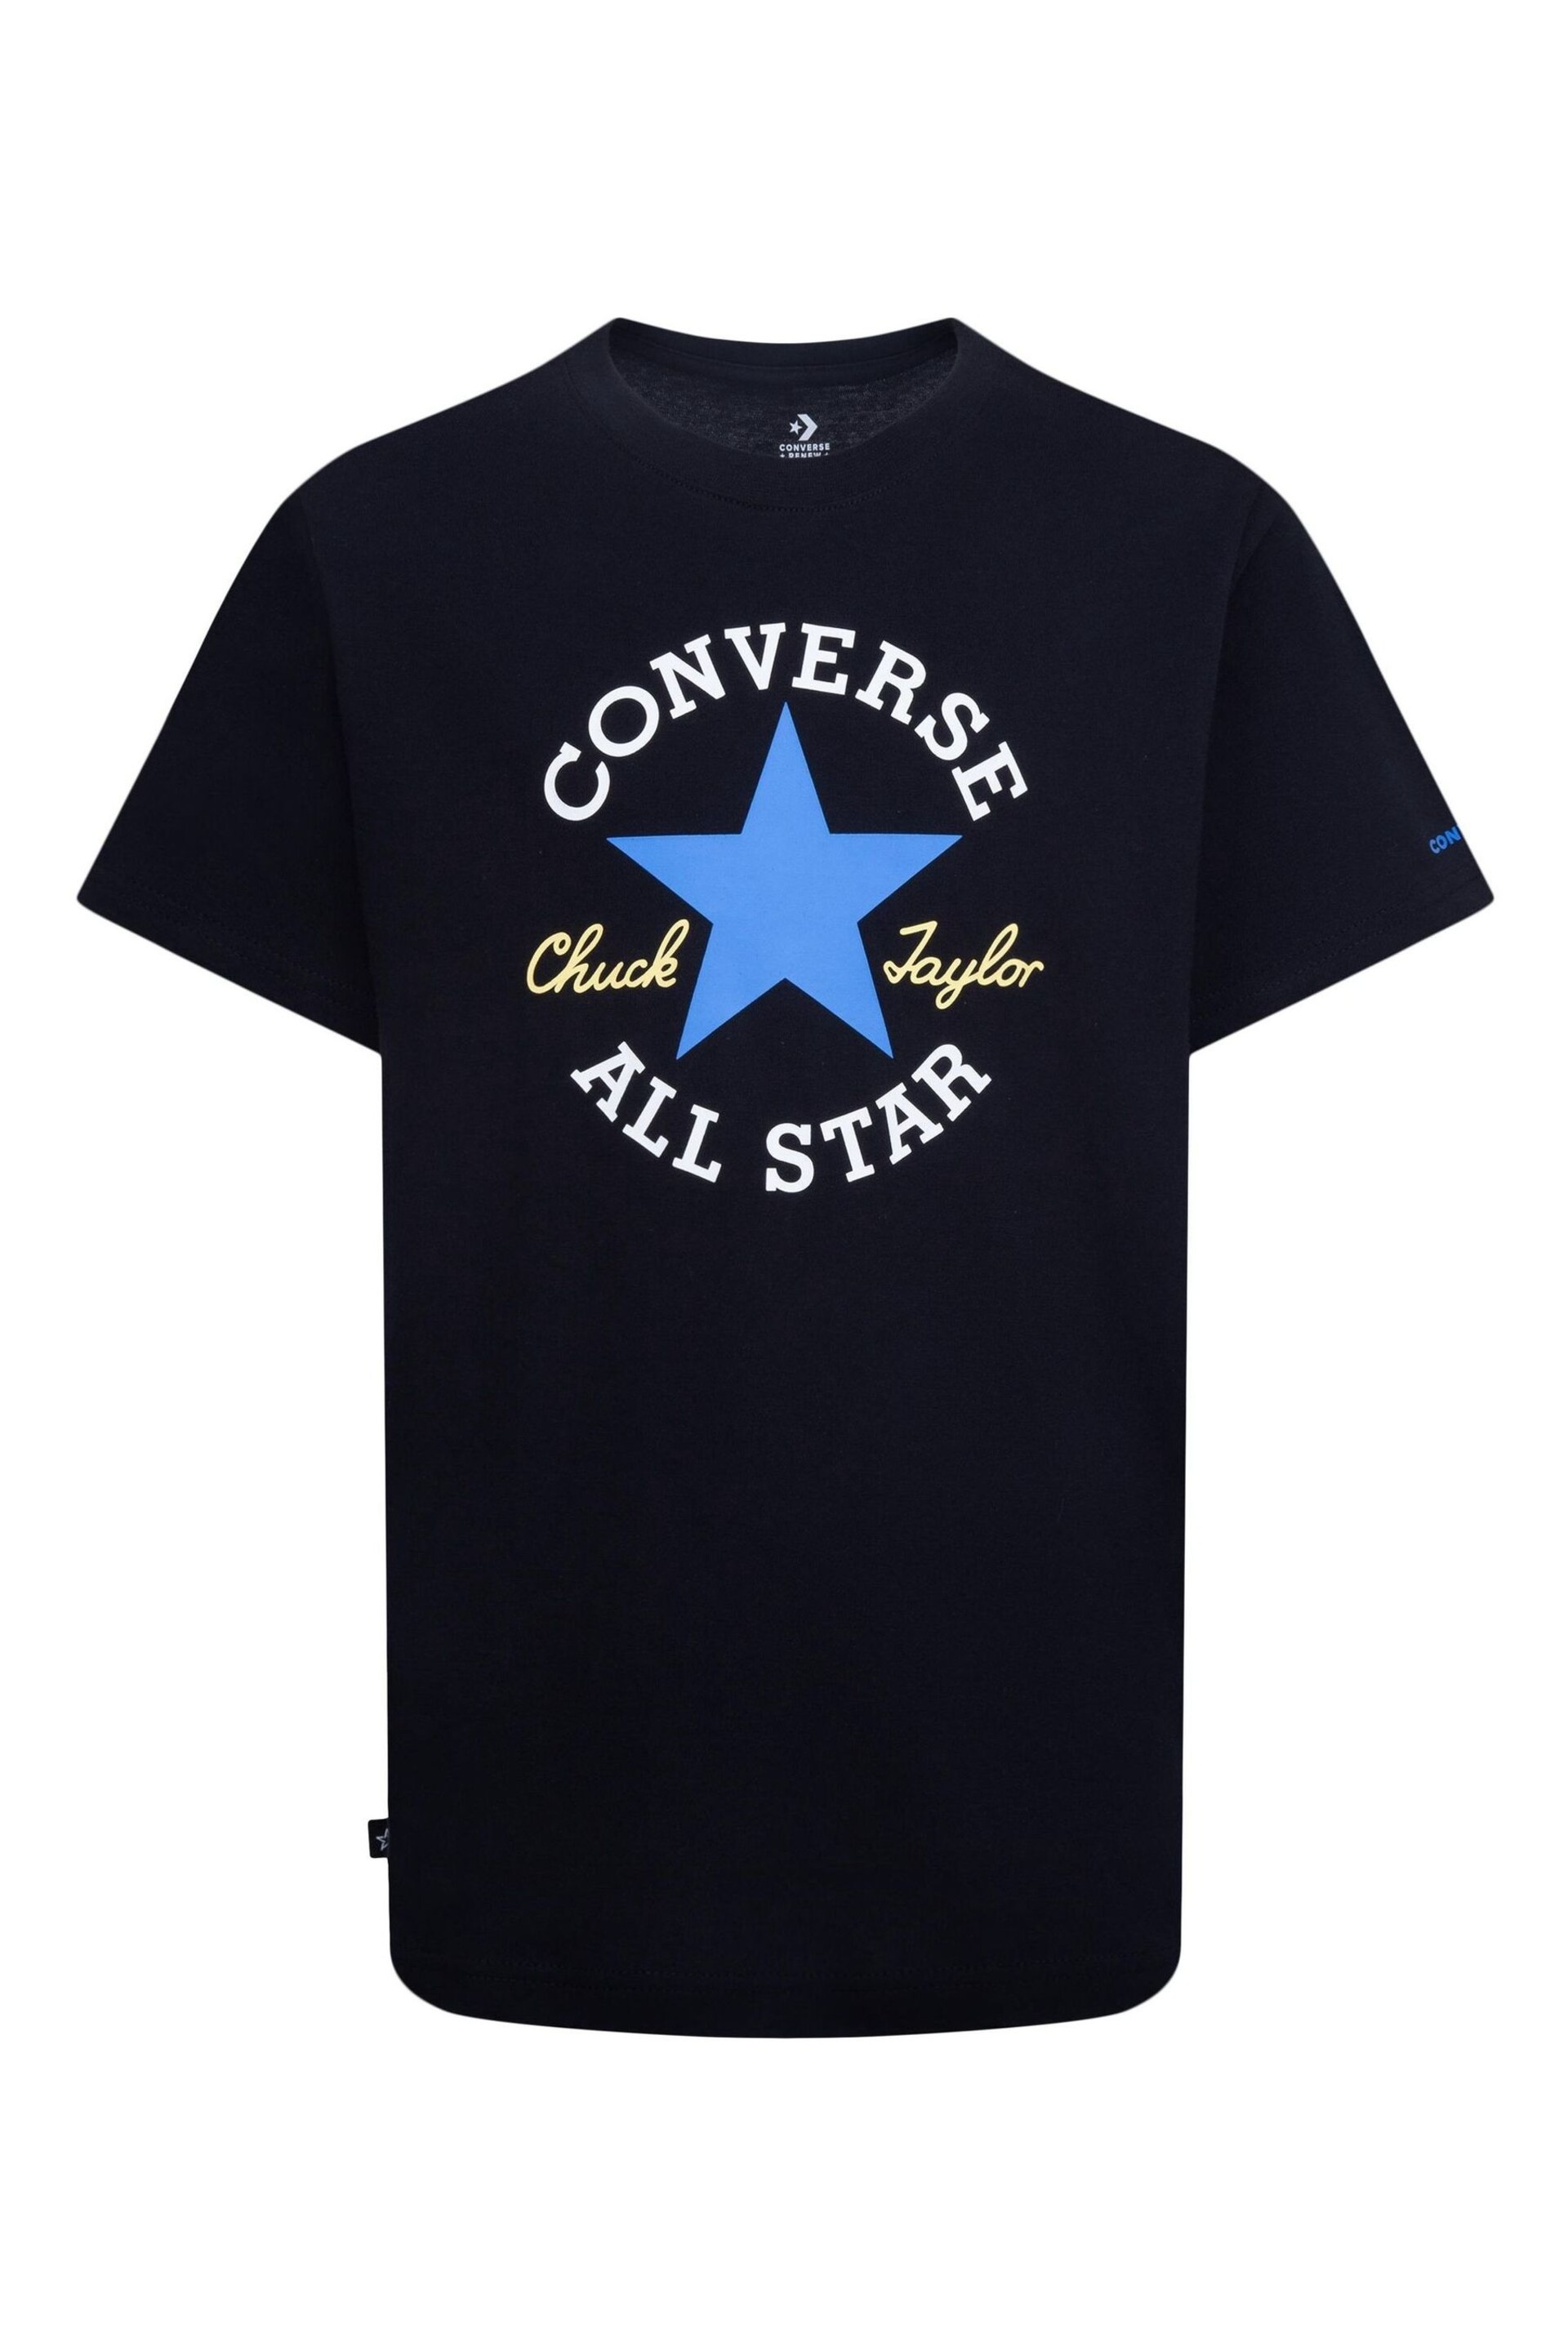 Converse Black C Bla Sust Core Ss T-Shirt - Image 1 of 1